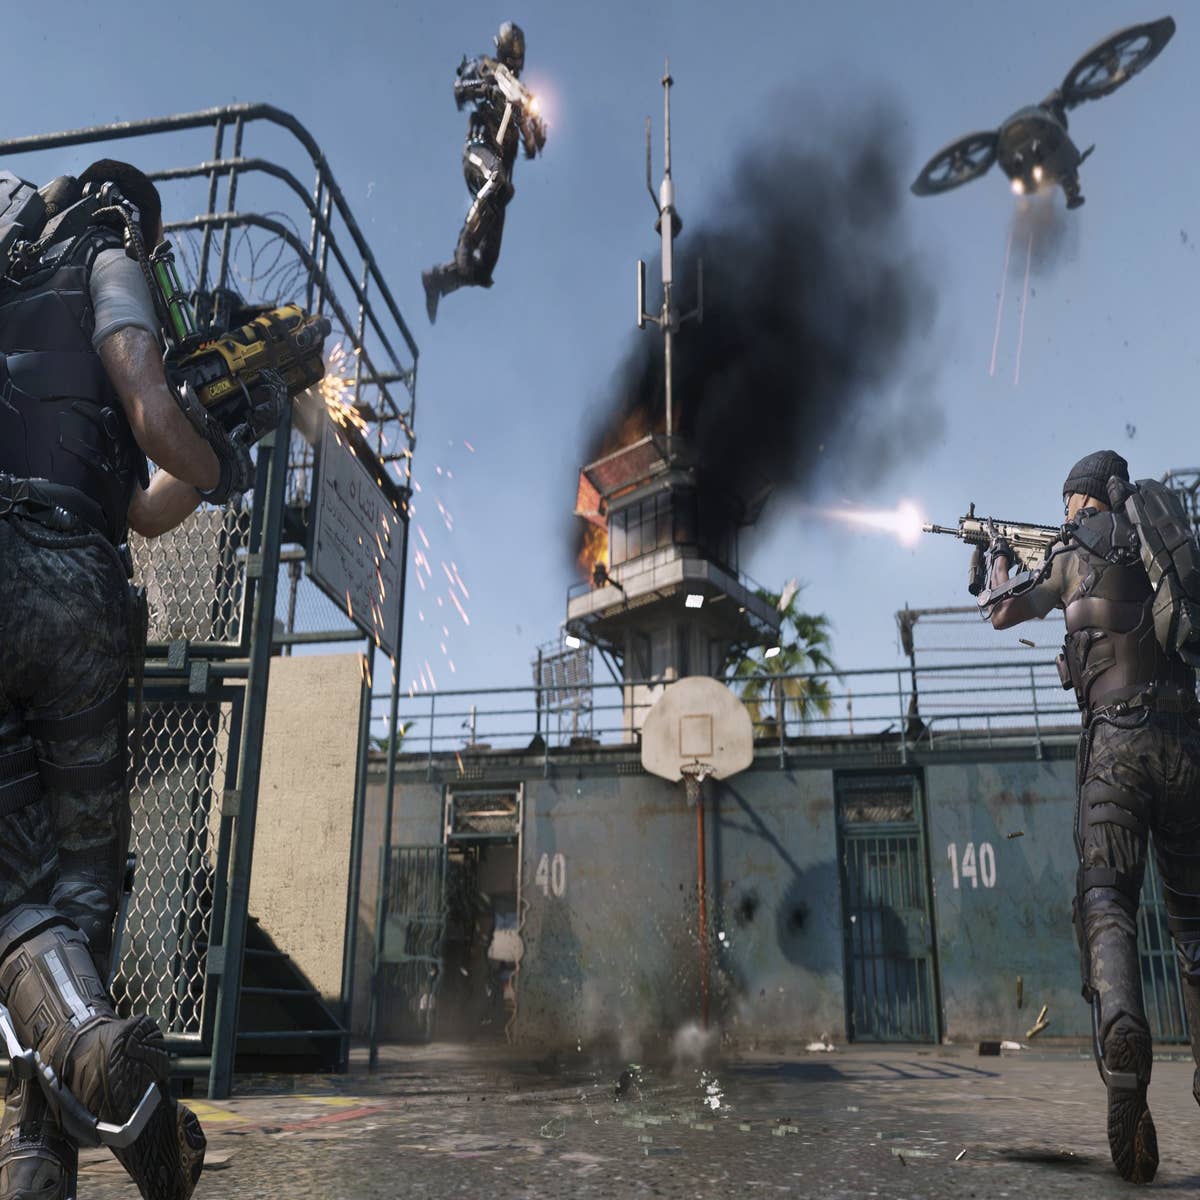 Sledgehammer wanted to make Call of Duty: Advanced Warfare 2